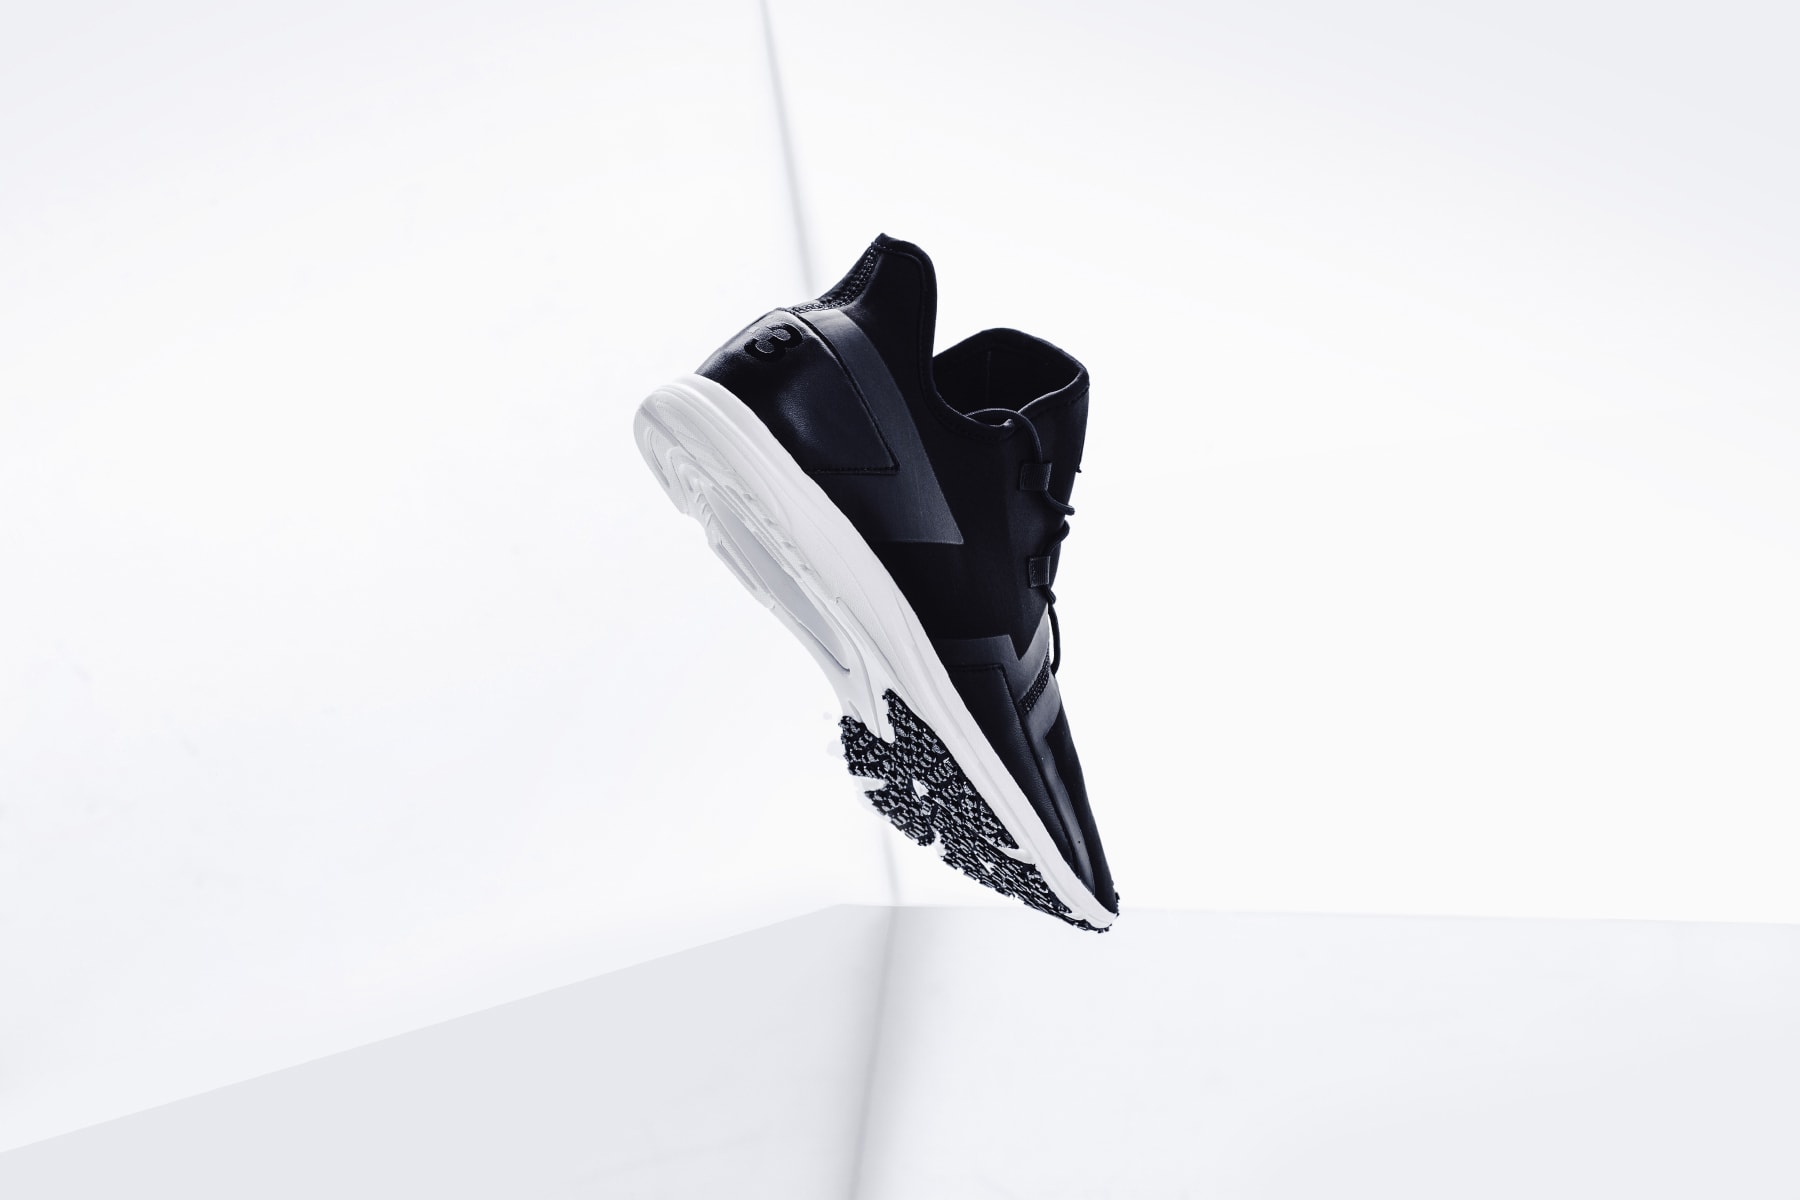 Y-3 Arc RC Sneaker in "Core Black"